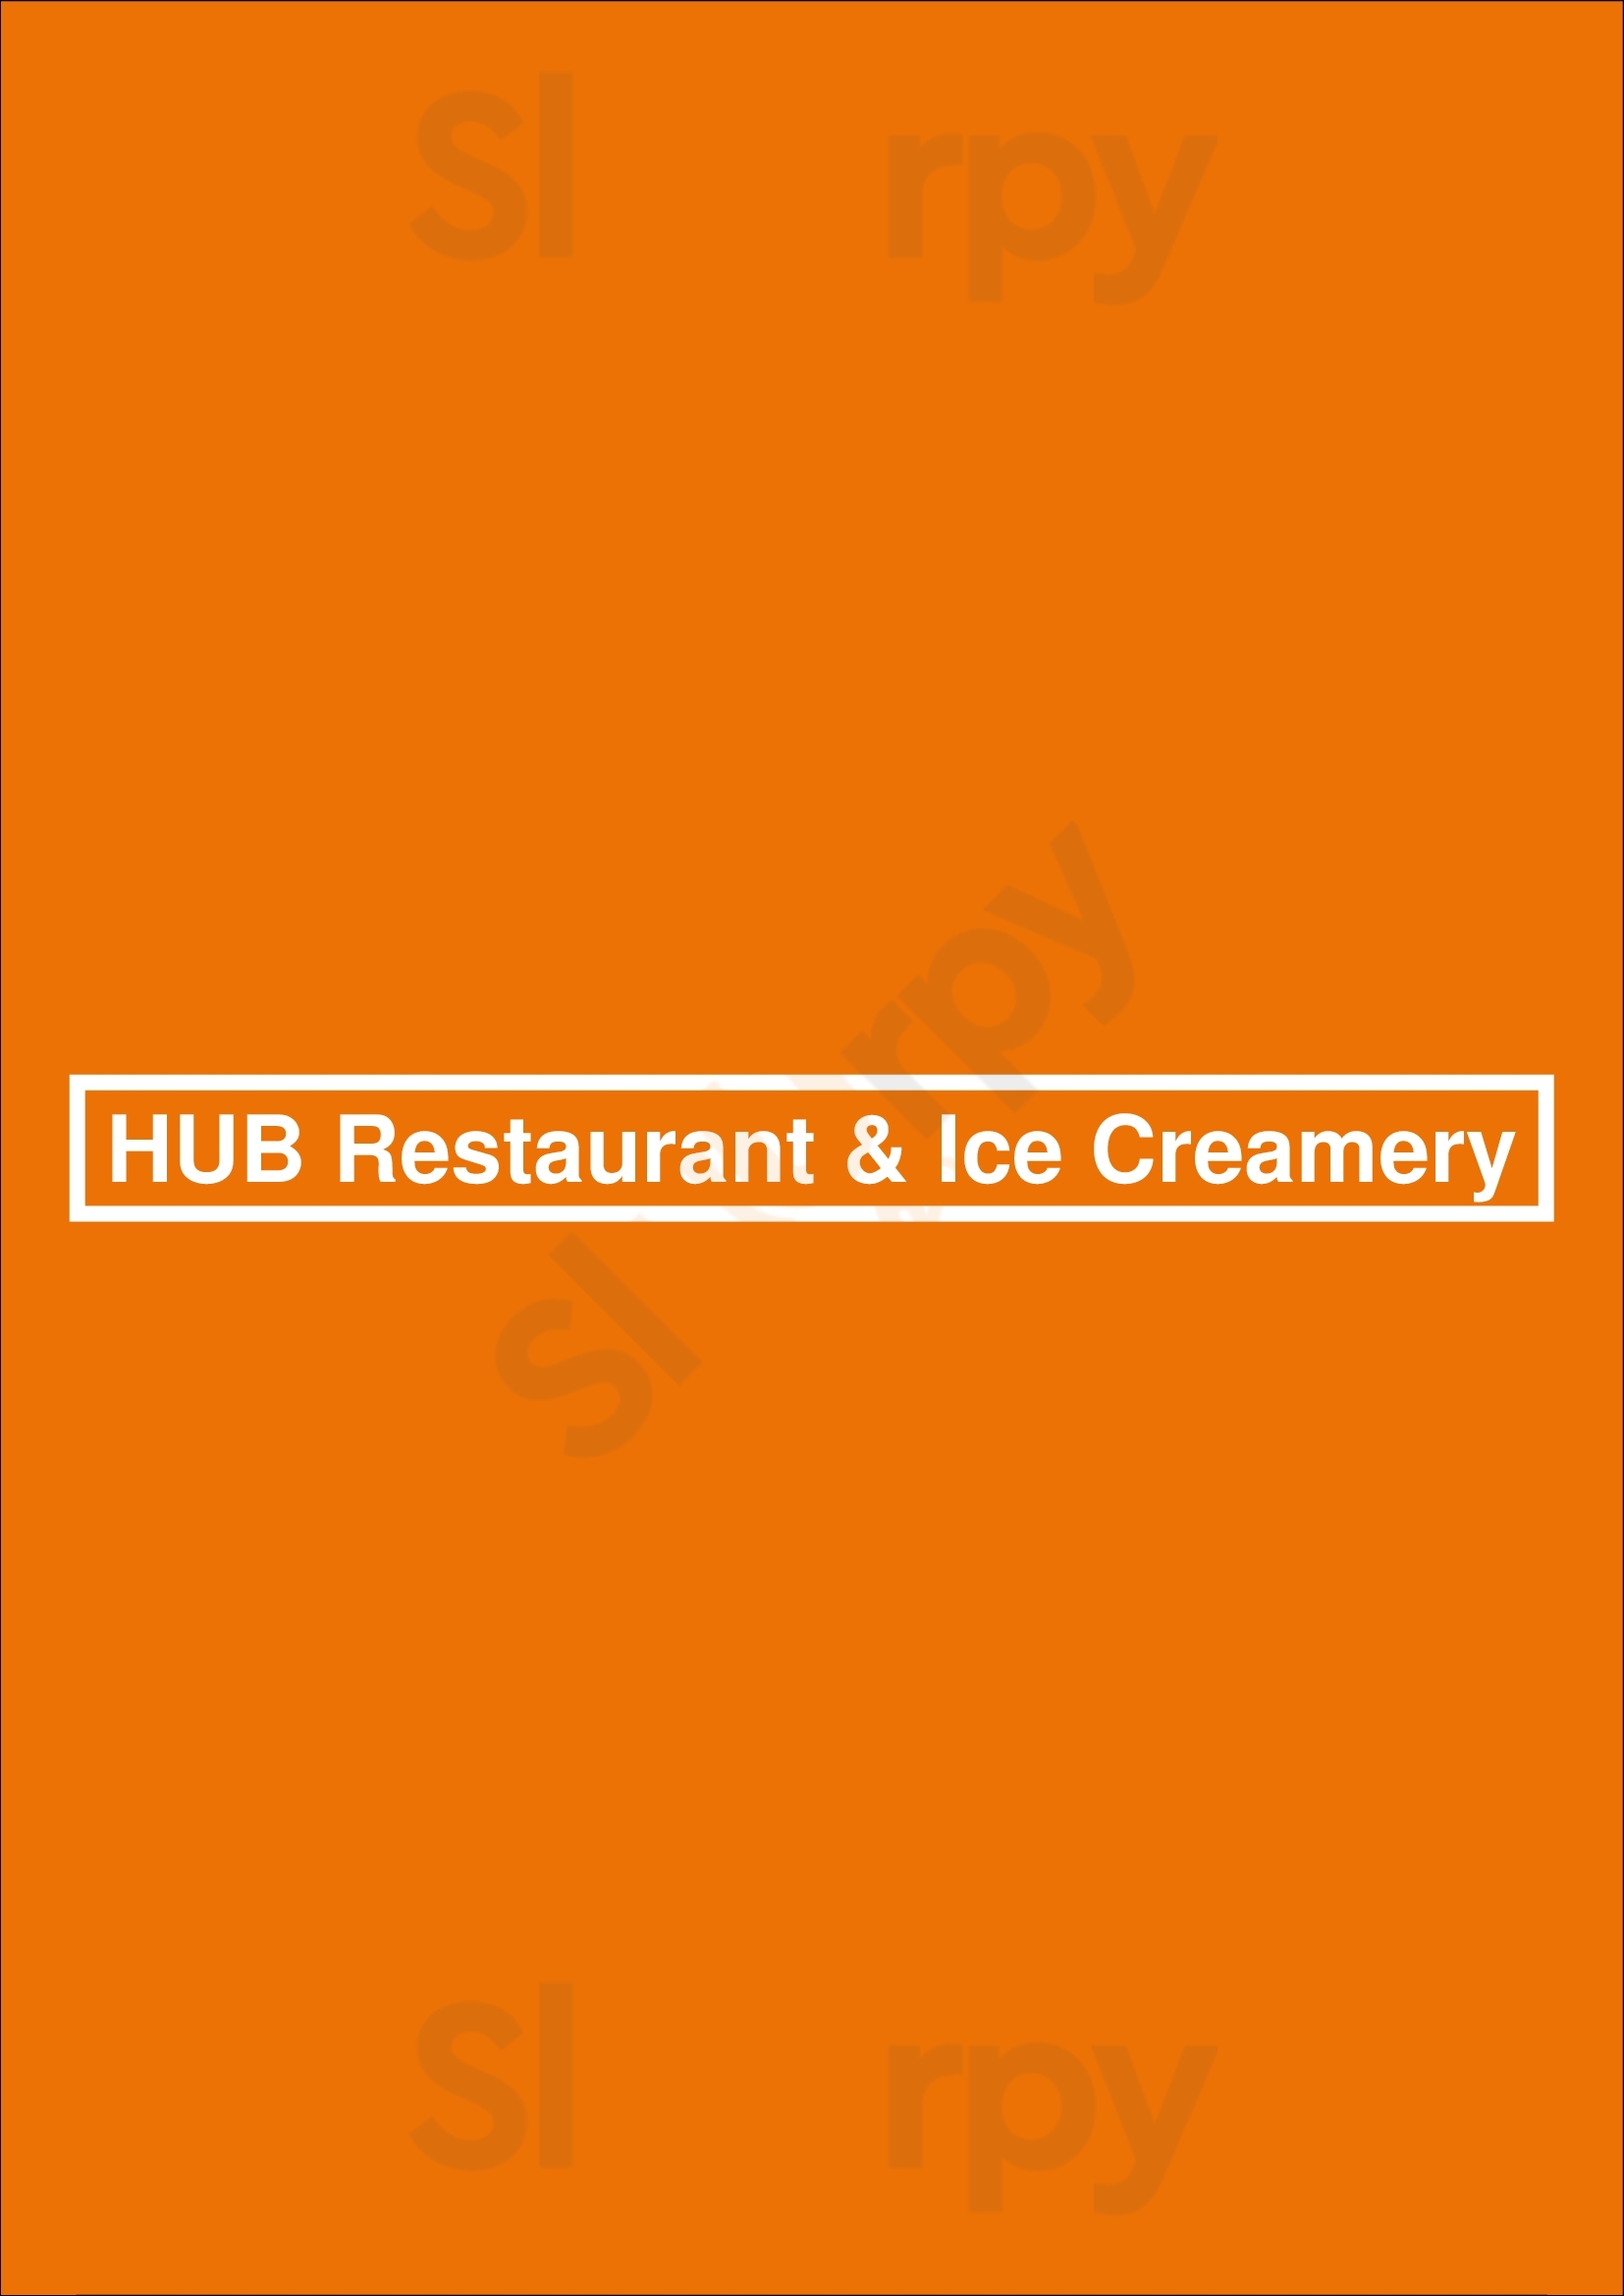 Hub Restaurant & Ice Creamery Tucson Menu - 1